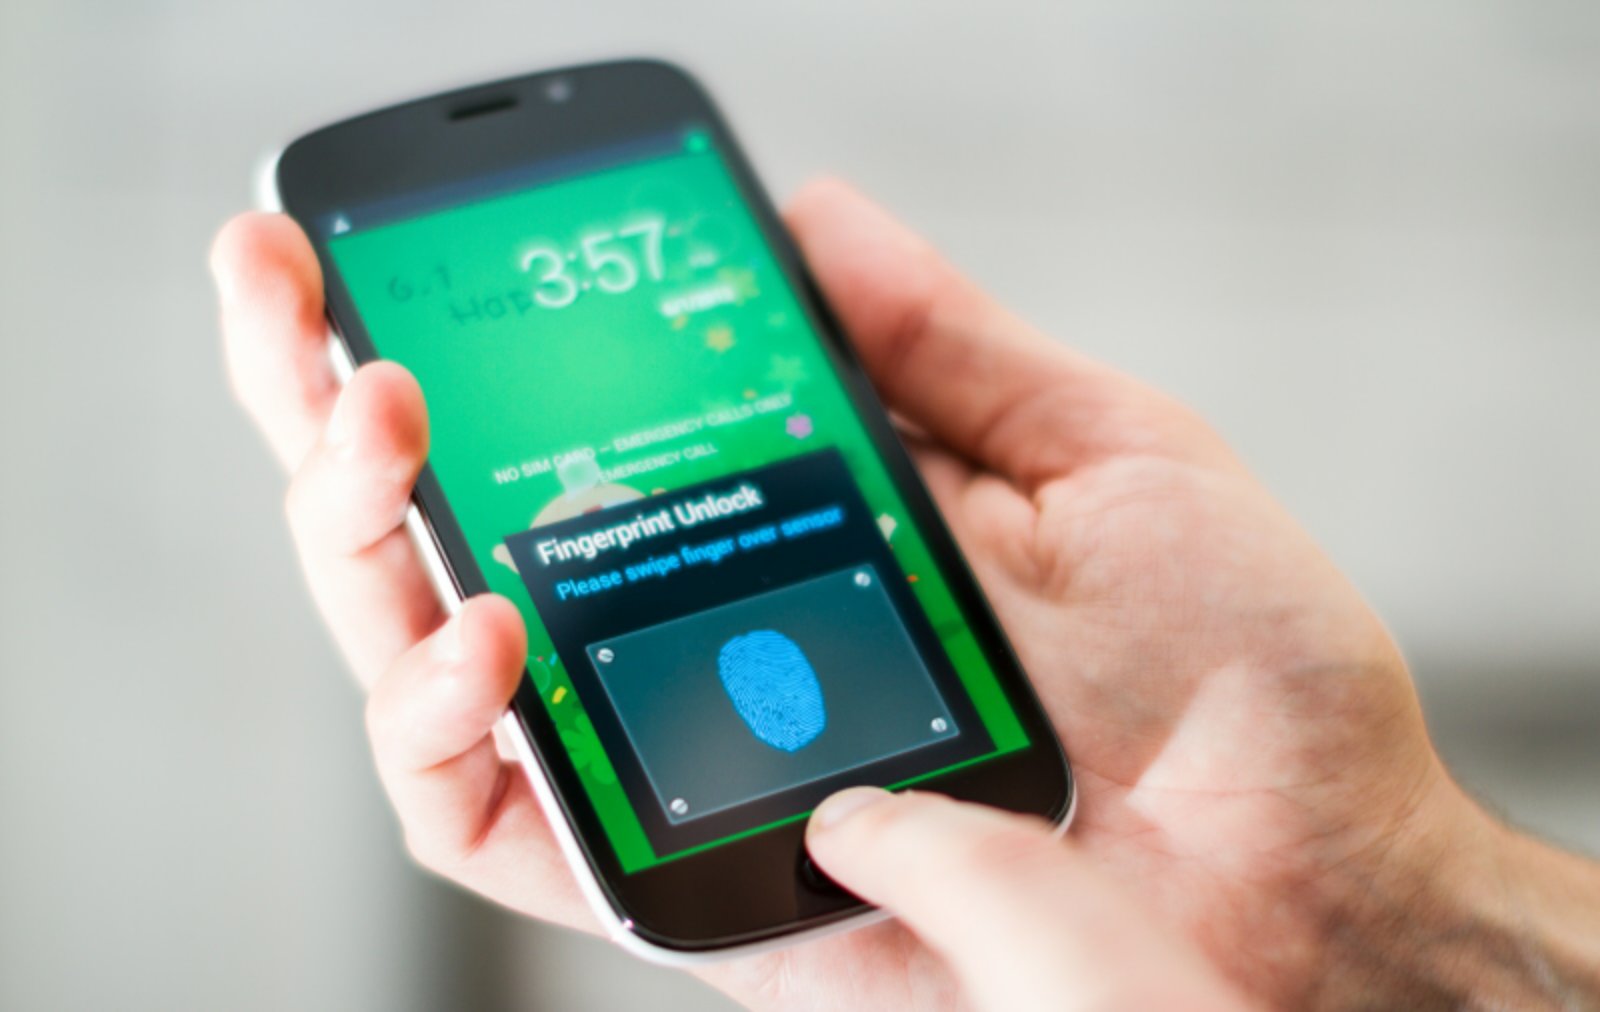 Samsung Galaxy S5 to feature fingerprint sensor on home button